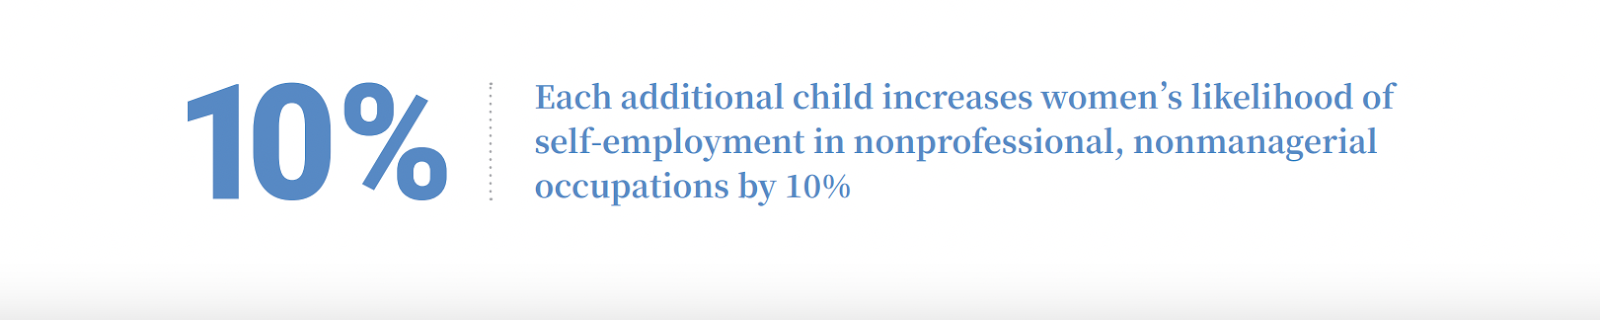 children increase likelihood of women self employment